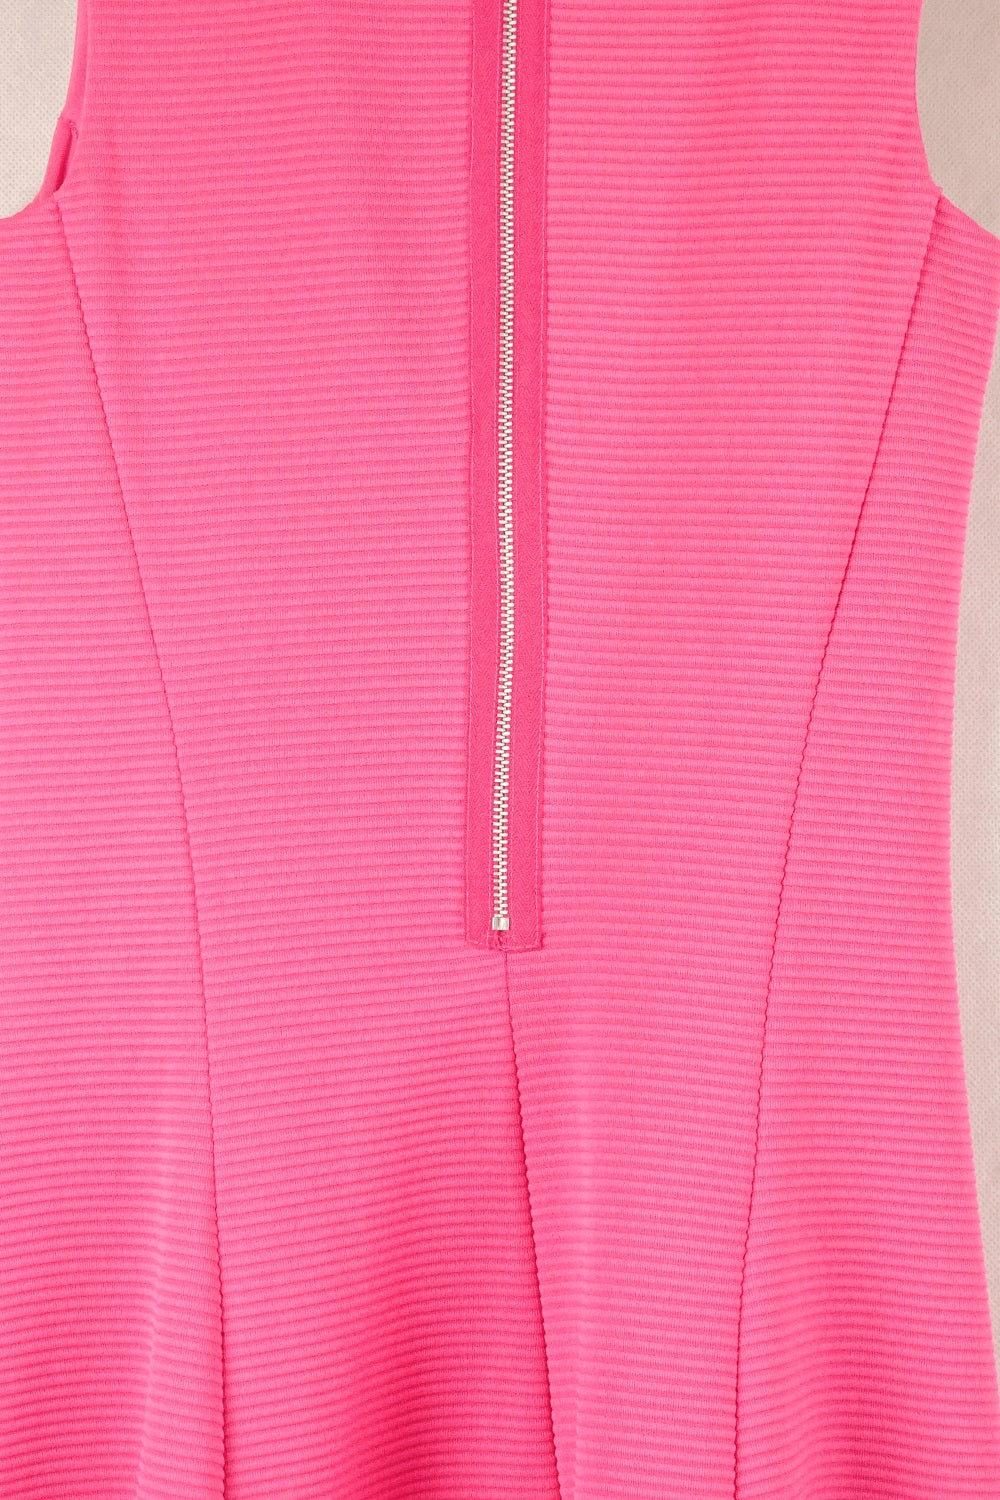 Asos Pink Dress 8 - CLAIMED